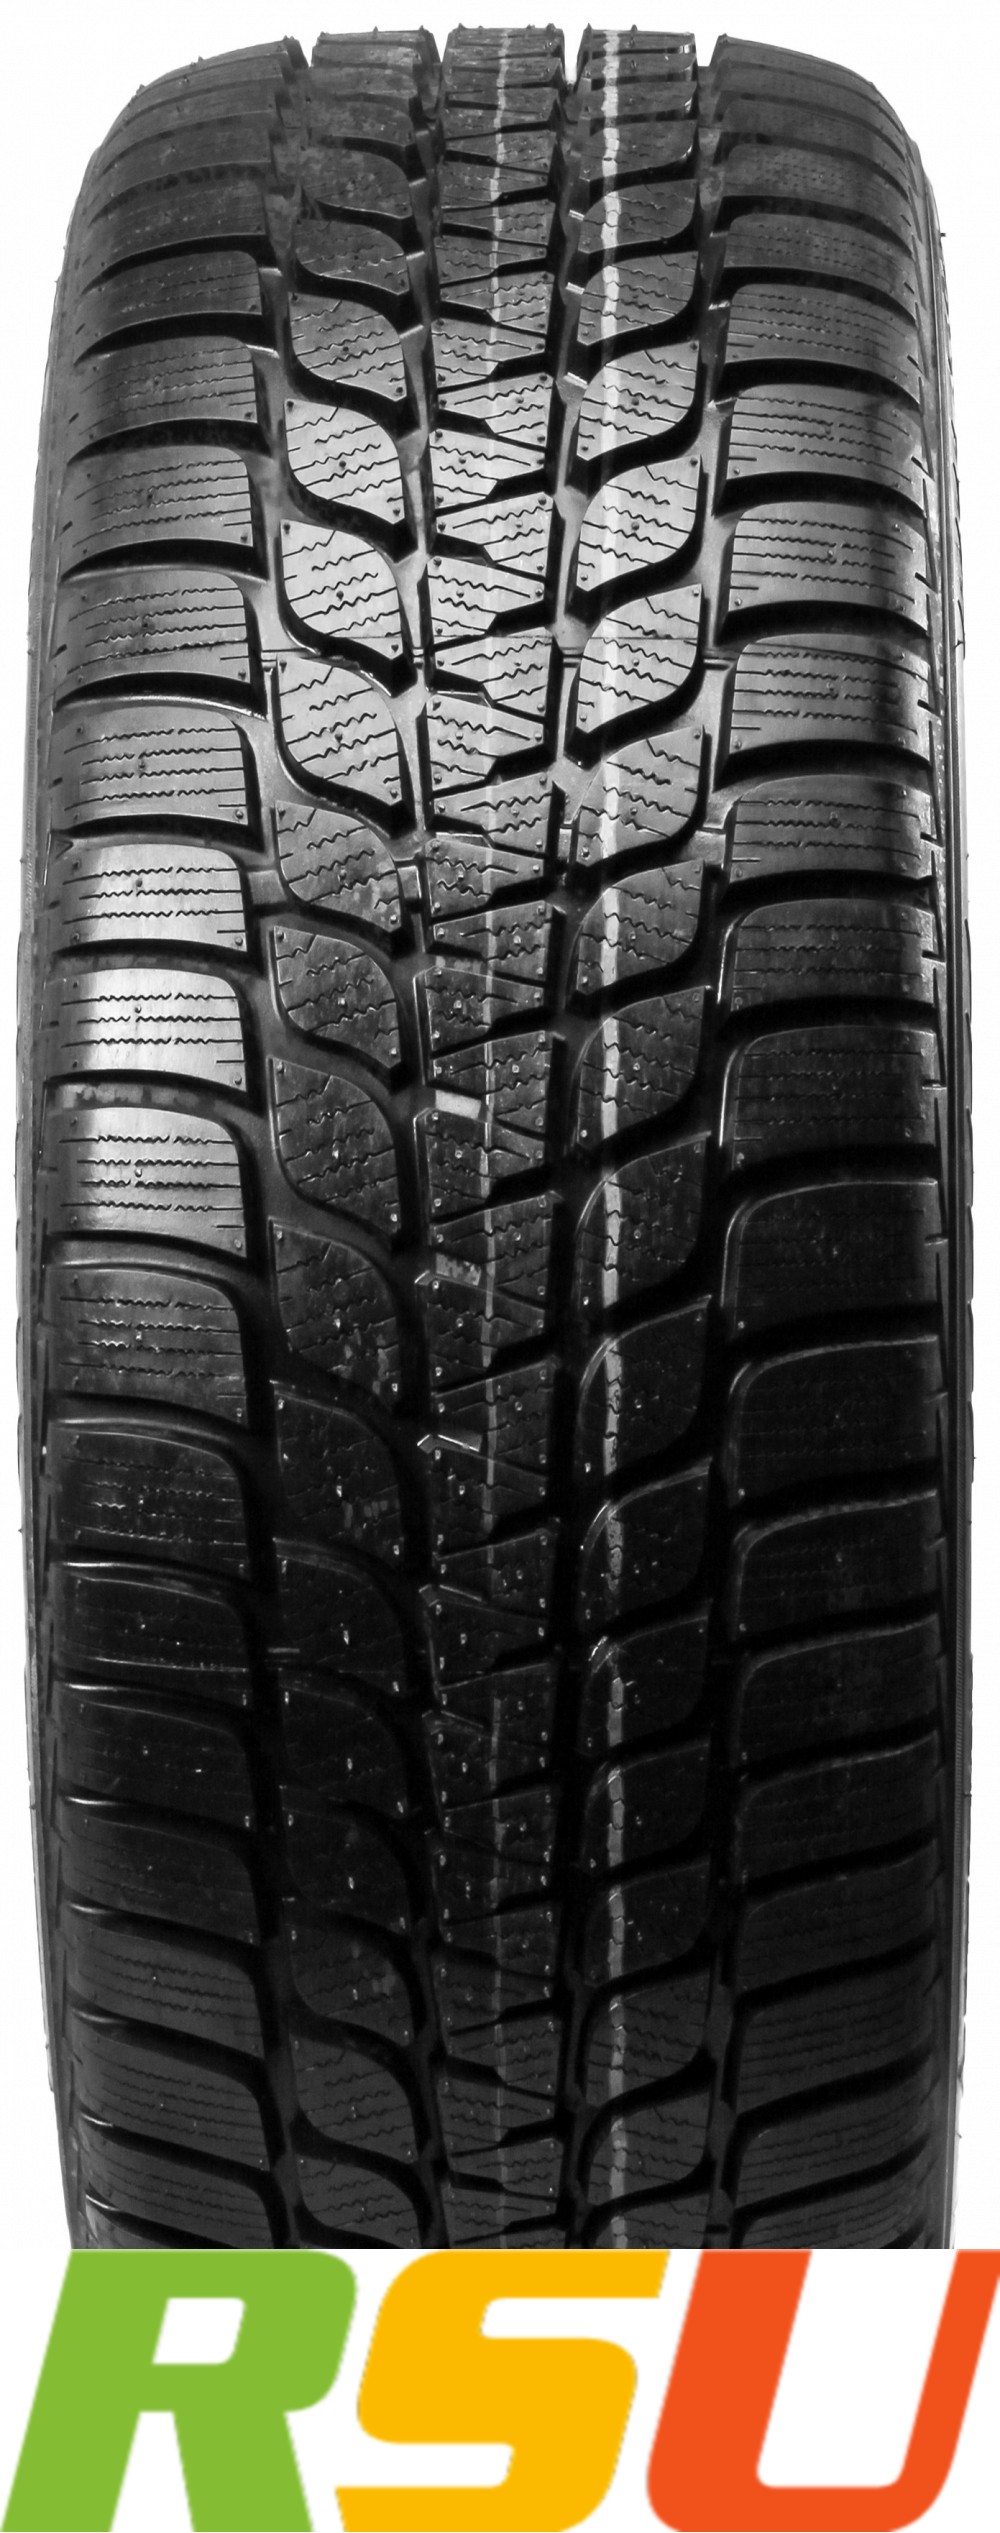 Bridgestone Blizzak LM-25 4X4 MO 3PMSF M+S DOT18 235/60 R17 102H  Winterreifen 3286340172011 | eBay